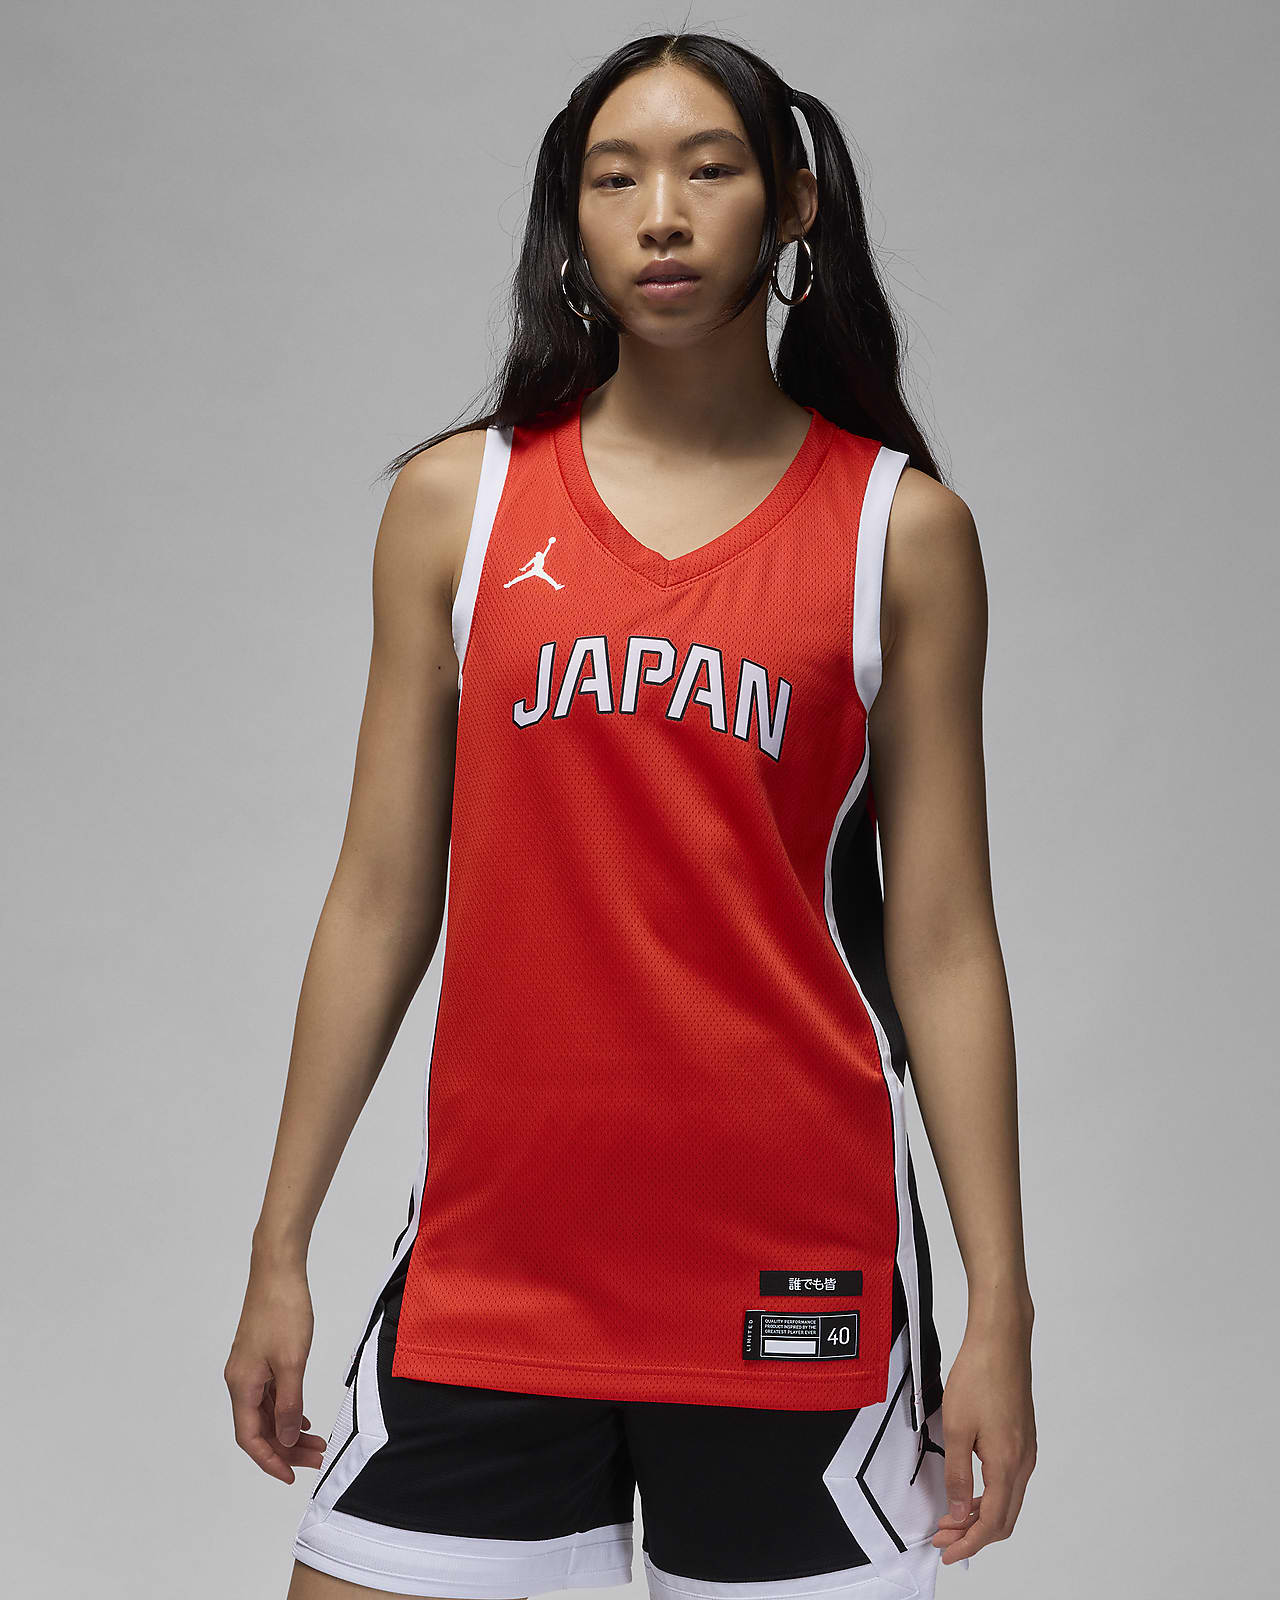 Japan Limited Road Women's Nike Basketball Jersey